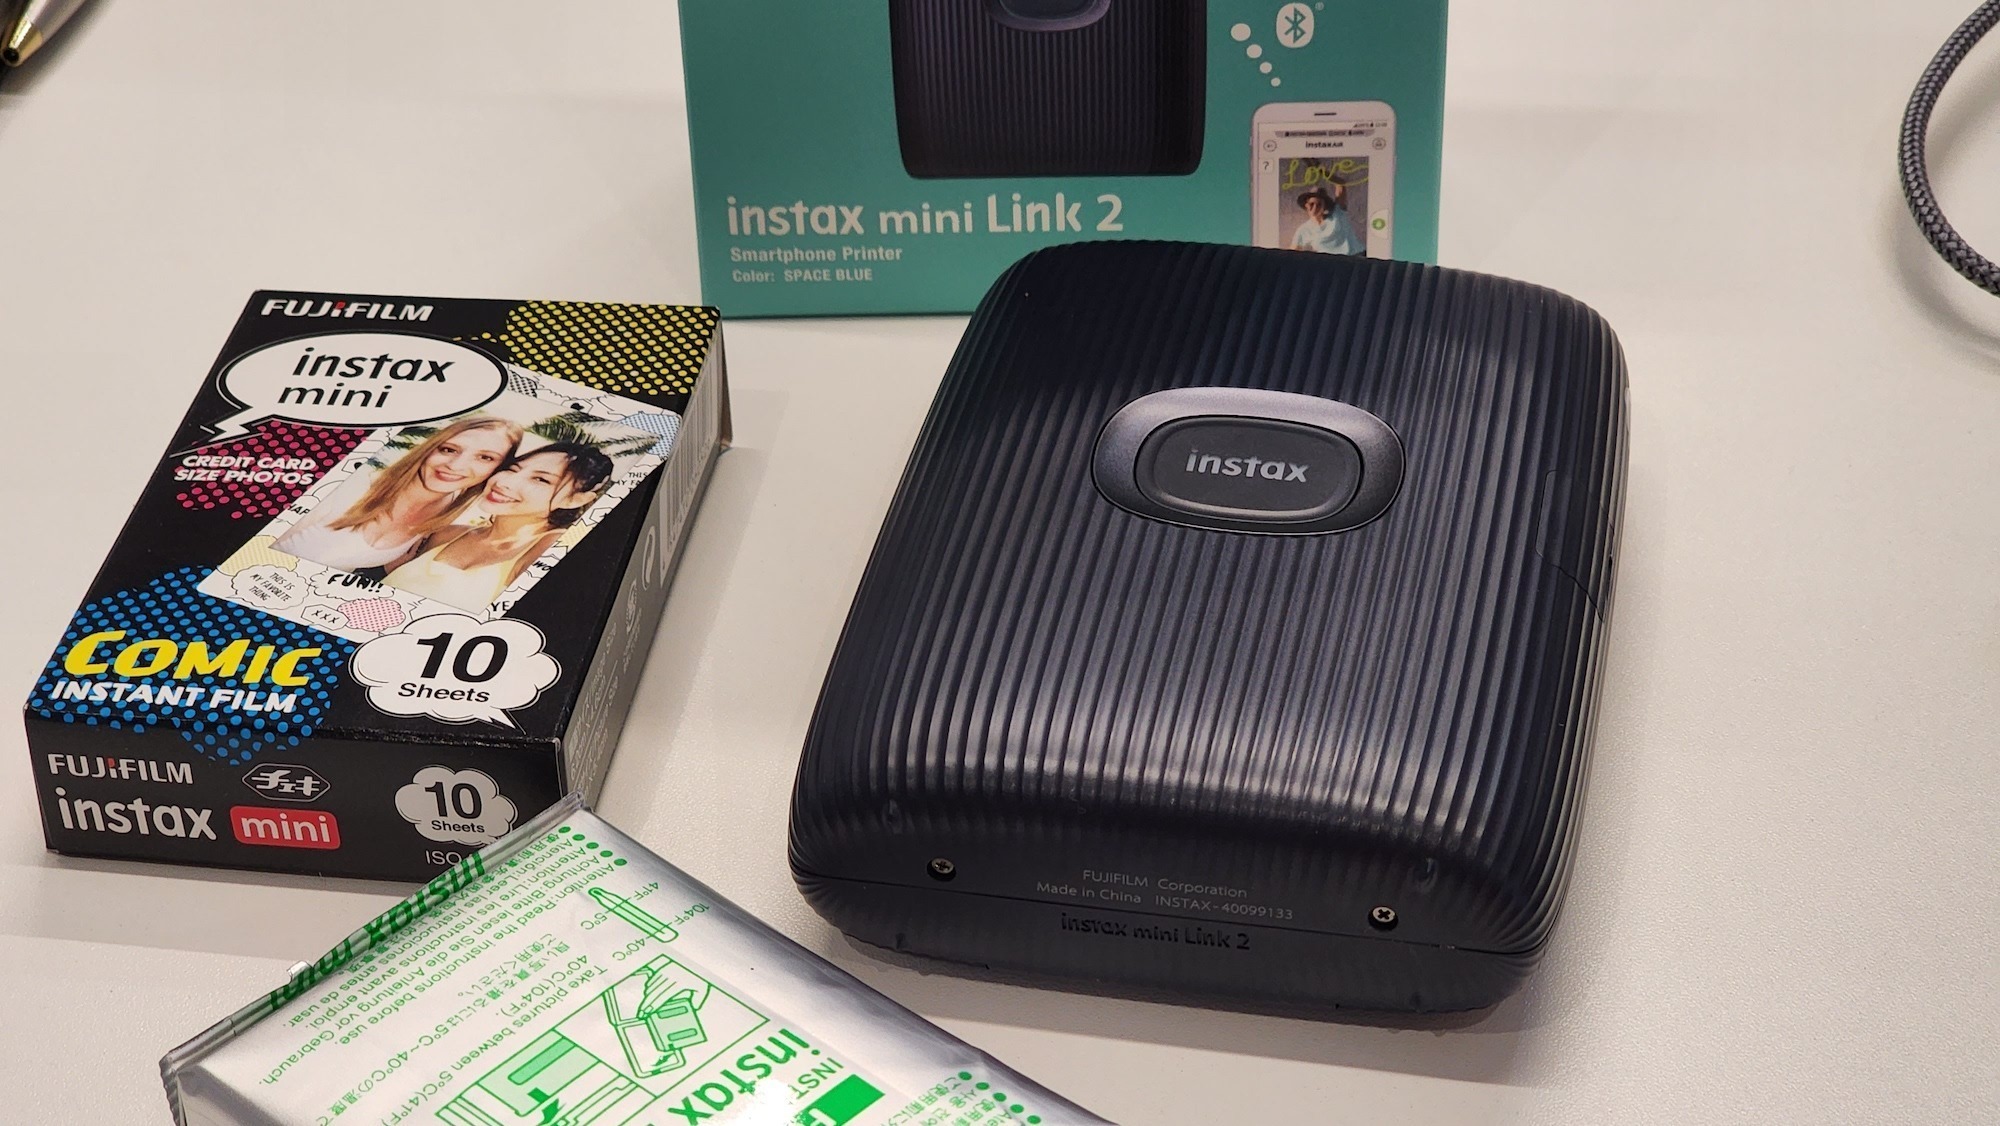 Fujifilm Instax mini Link 2 review: Portable printer with retro